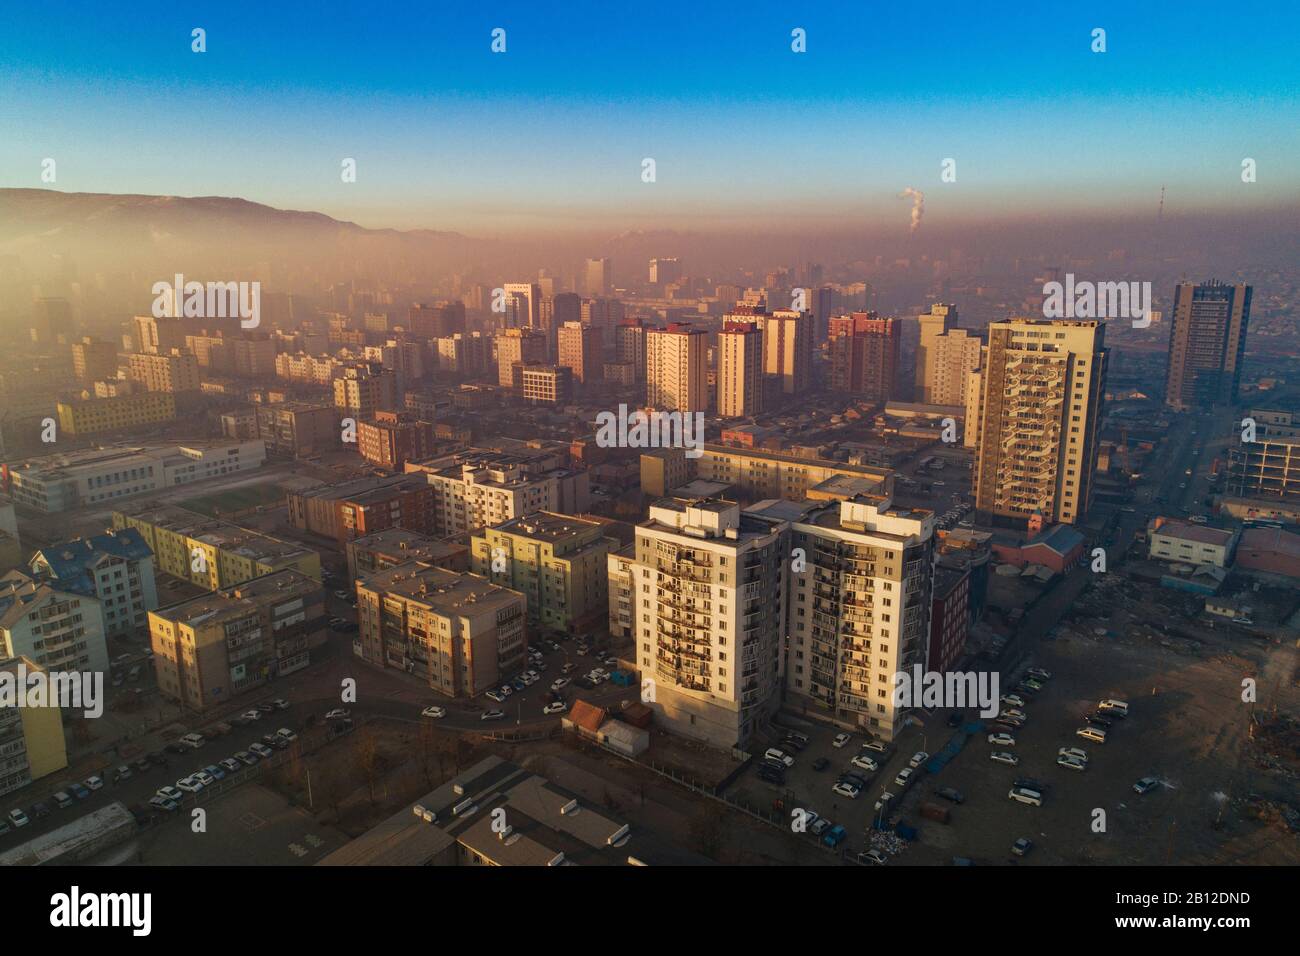 Ulaanbaatar at sunrise with smog, Mongolia Stock Photo